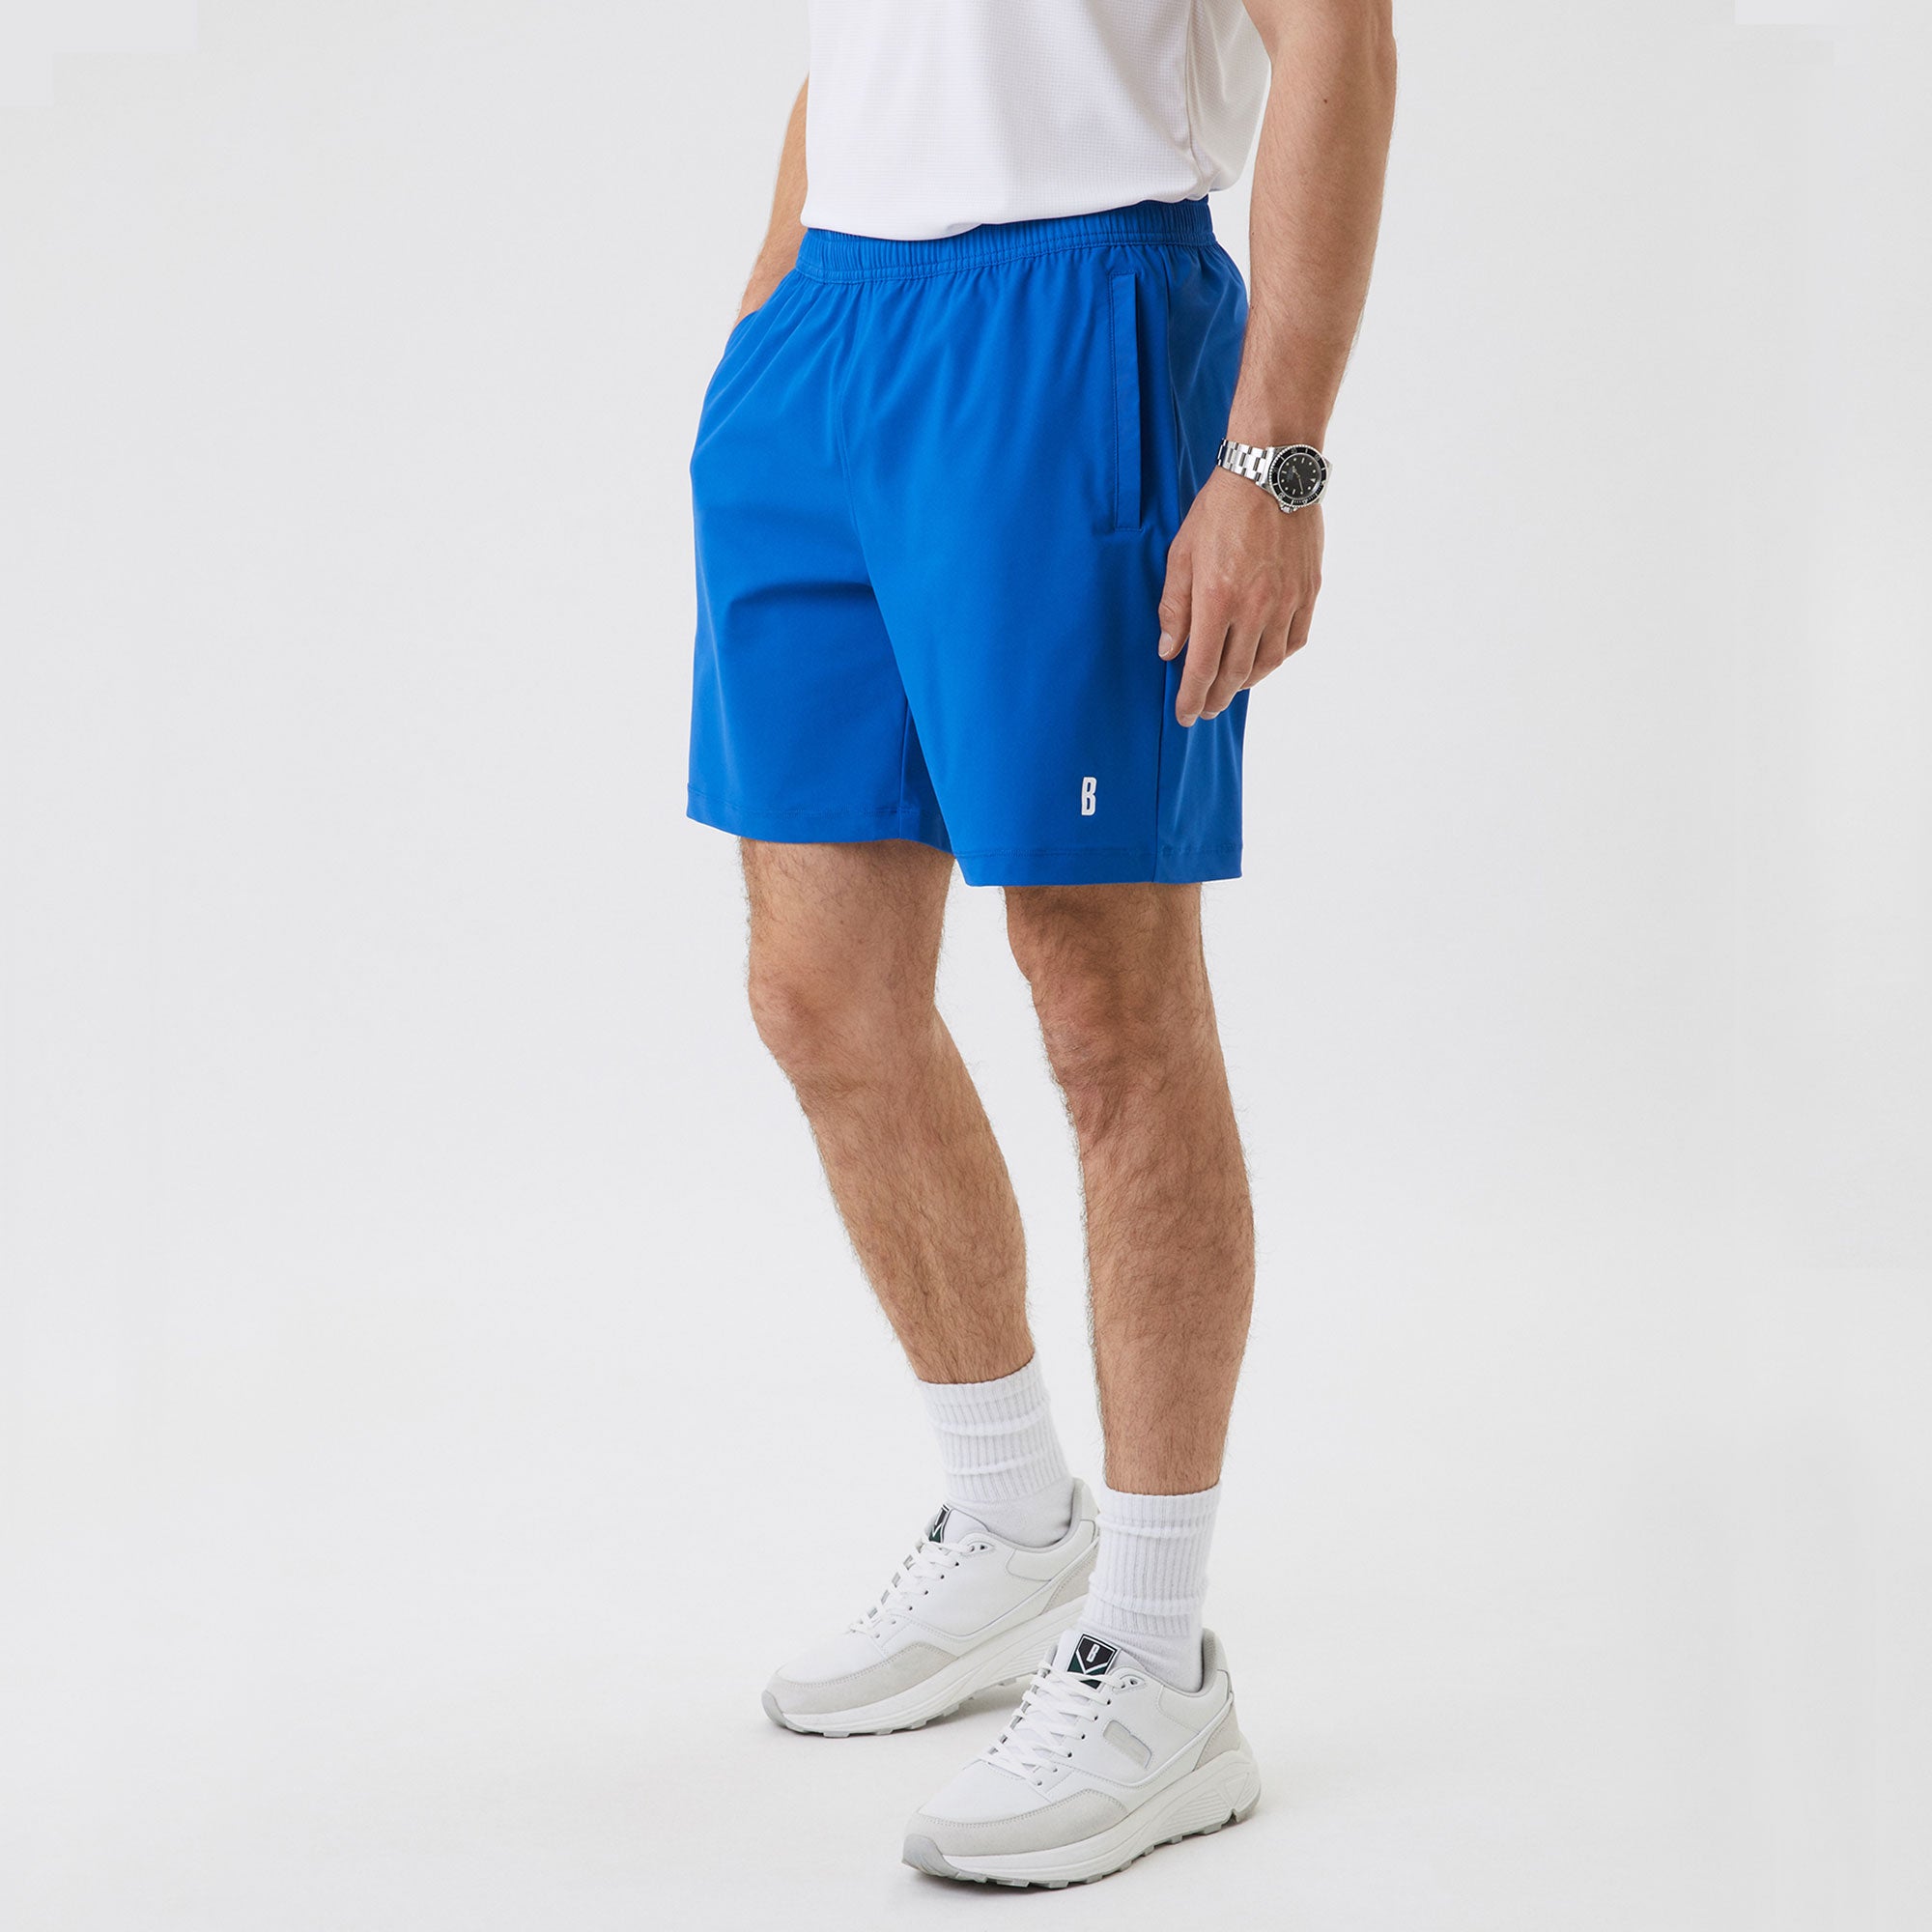 Björn Borg Ace Men's Tennis Pants - Dark Blue